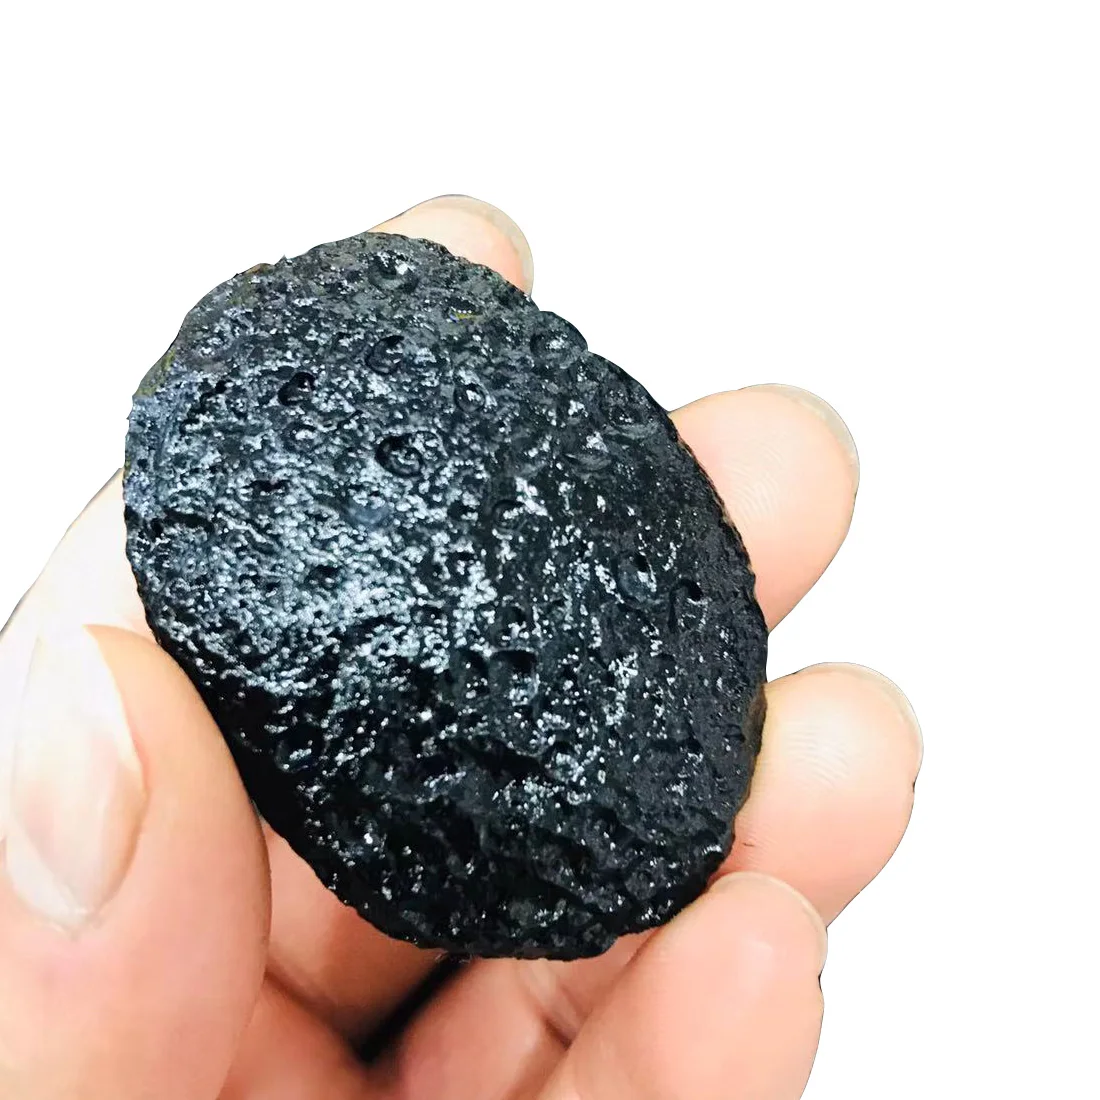 RAW Tektite meteorite stone